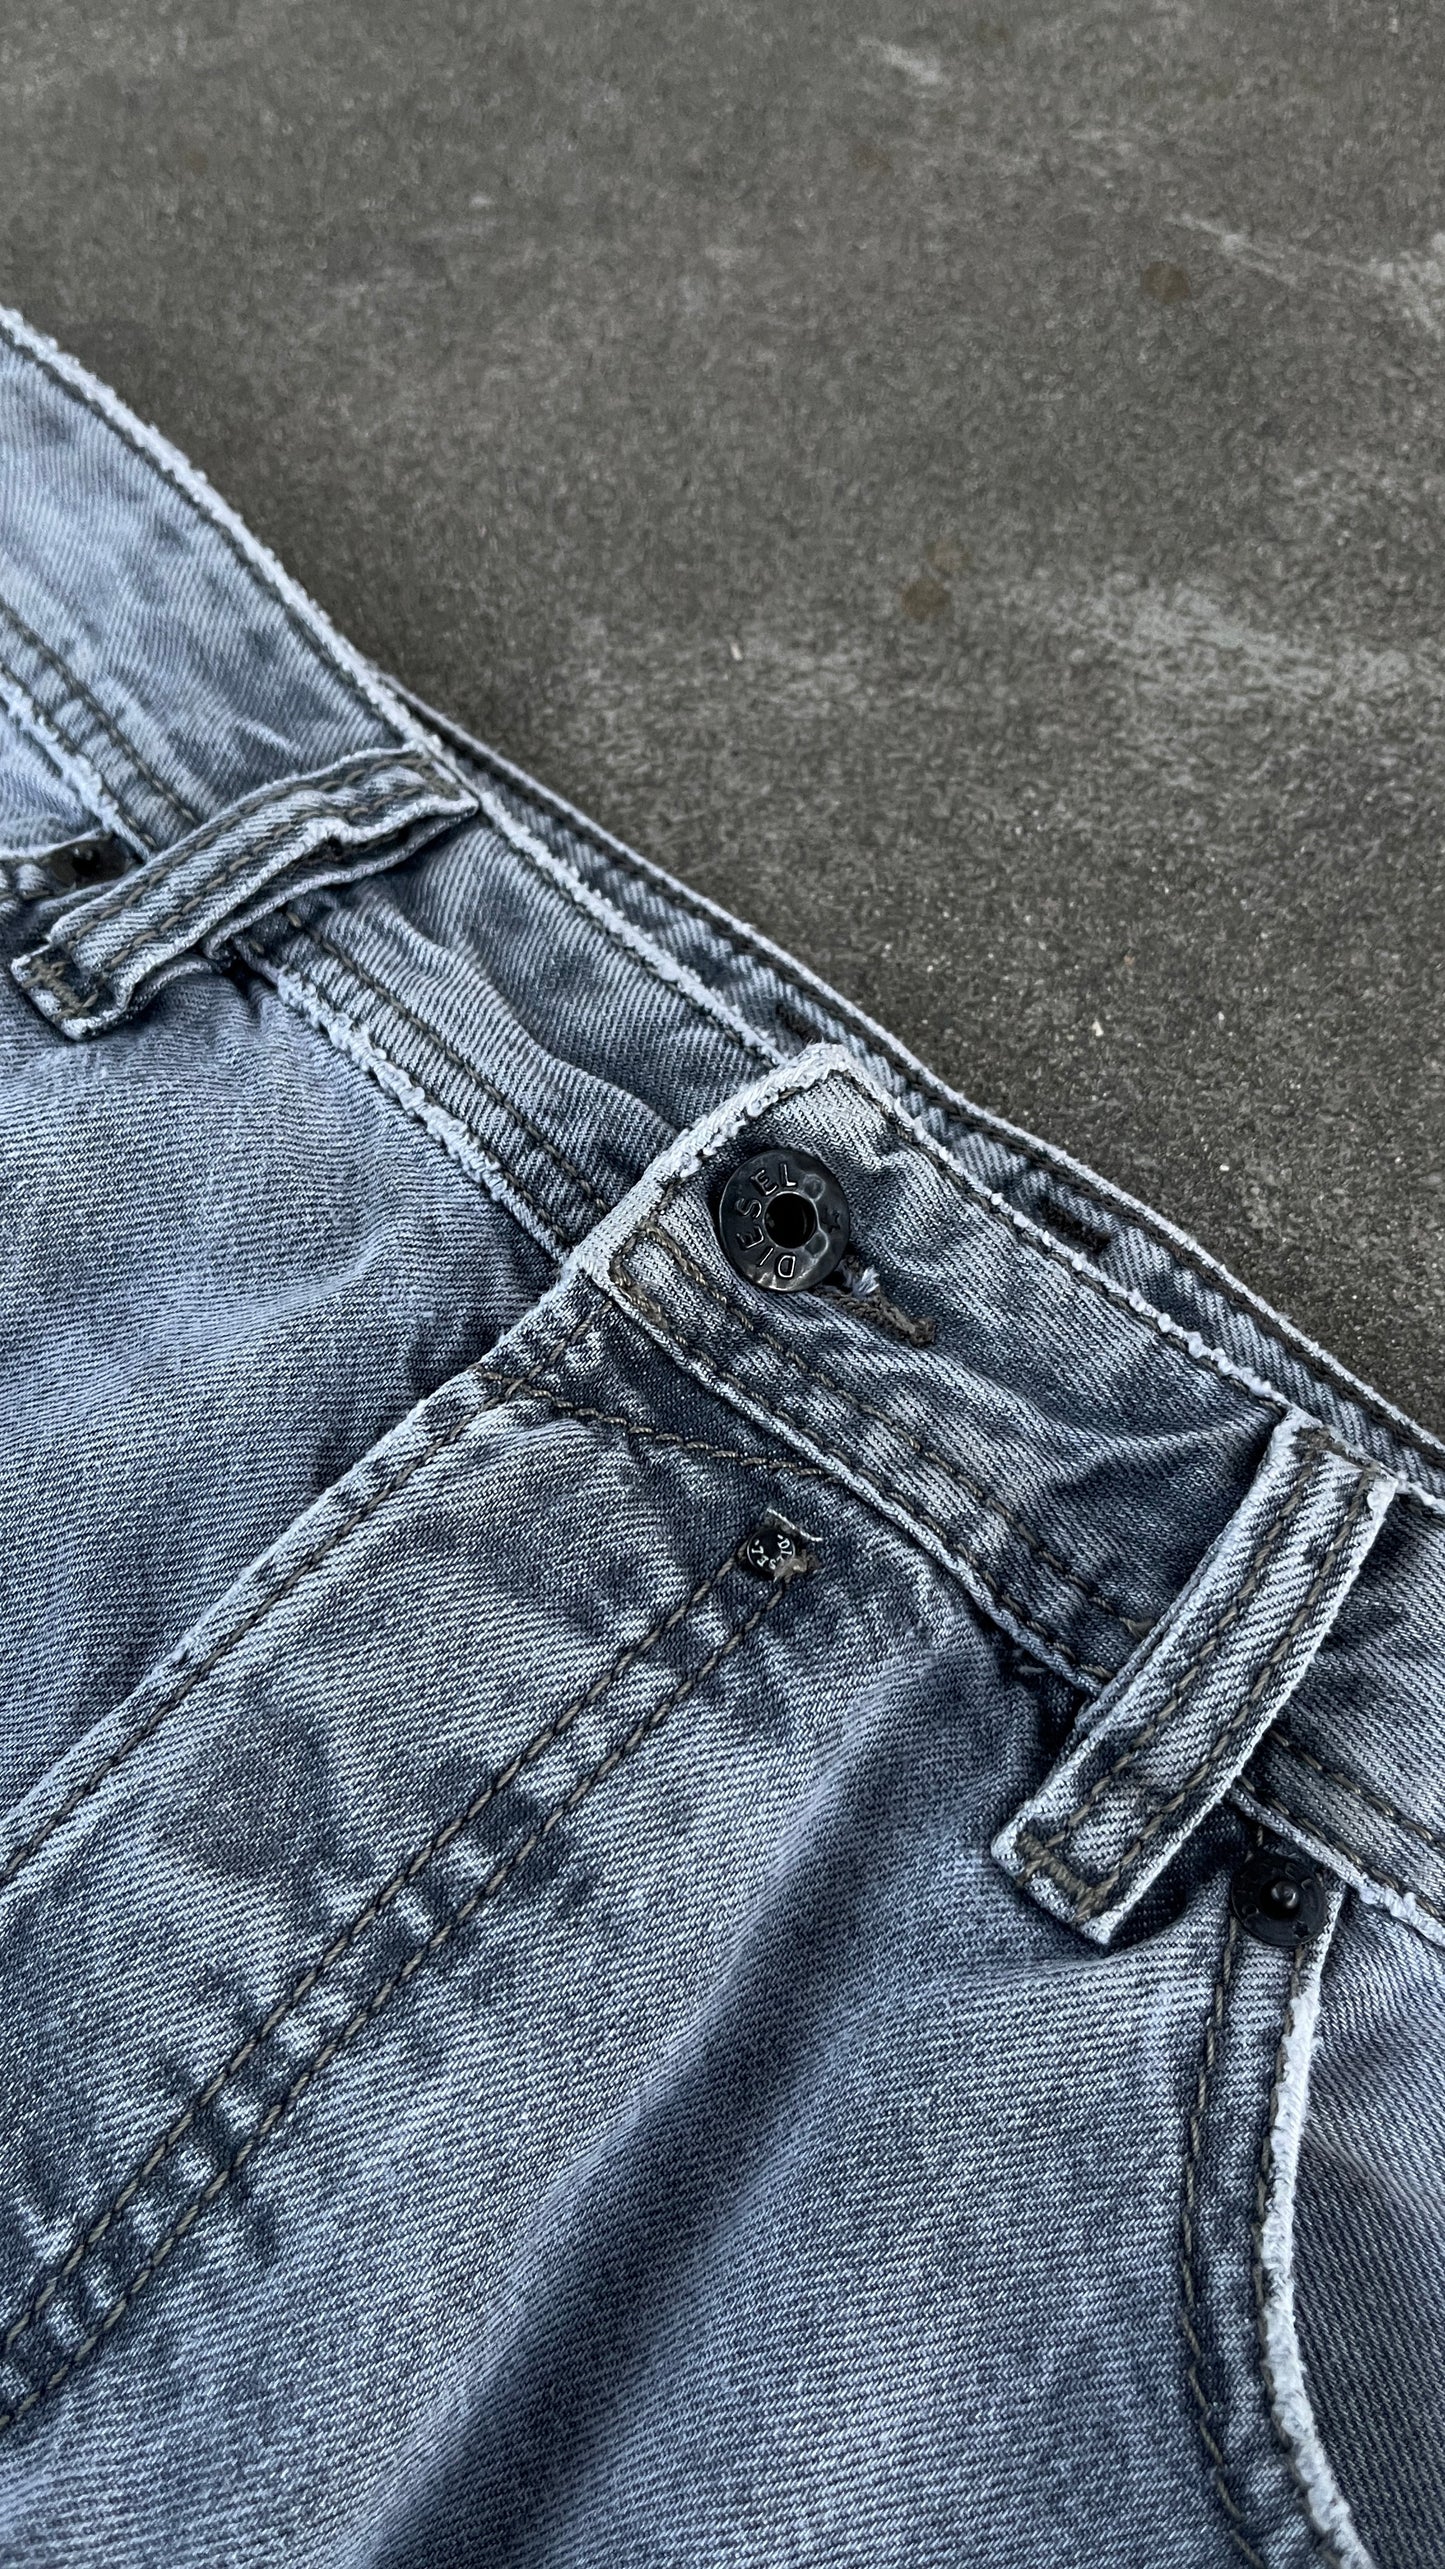 Diesel Jeans - Safado  Size: 37 x 32